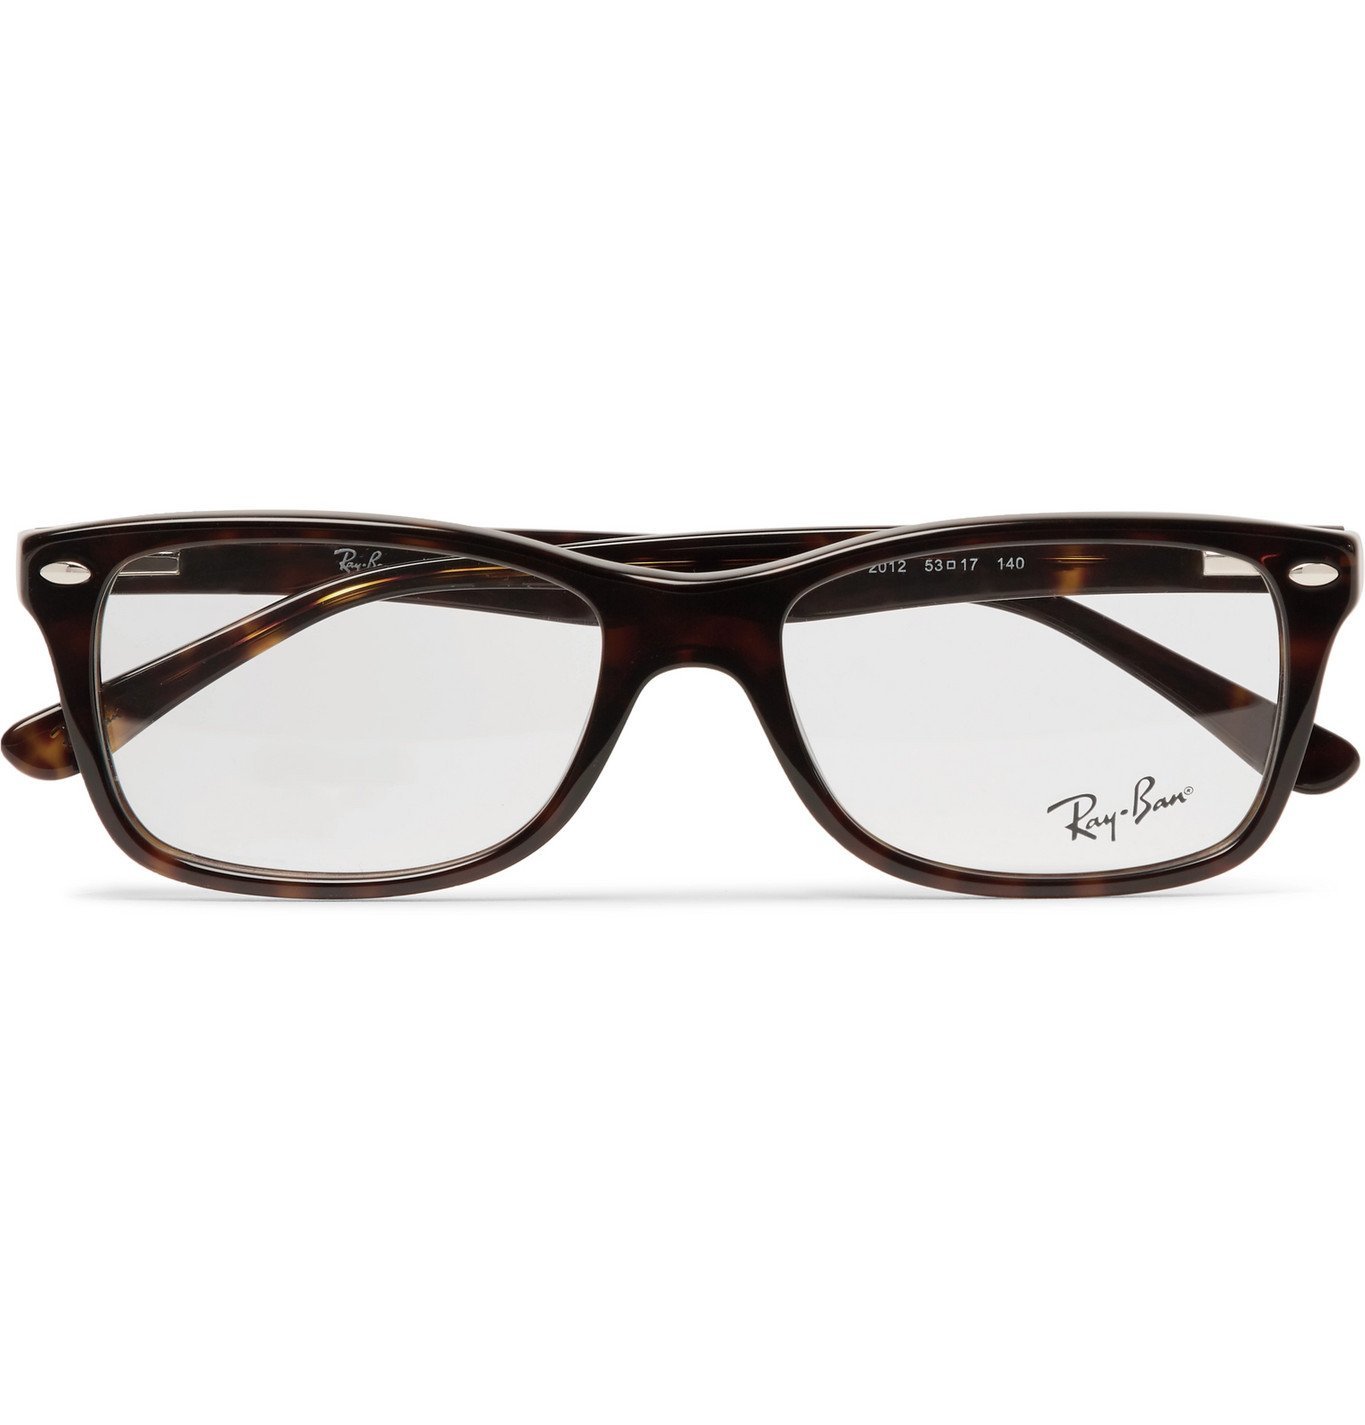 Ray-Ban - Square-Frame Acetate Optical Glasses - Brown Ray Ban